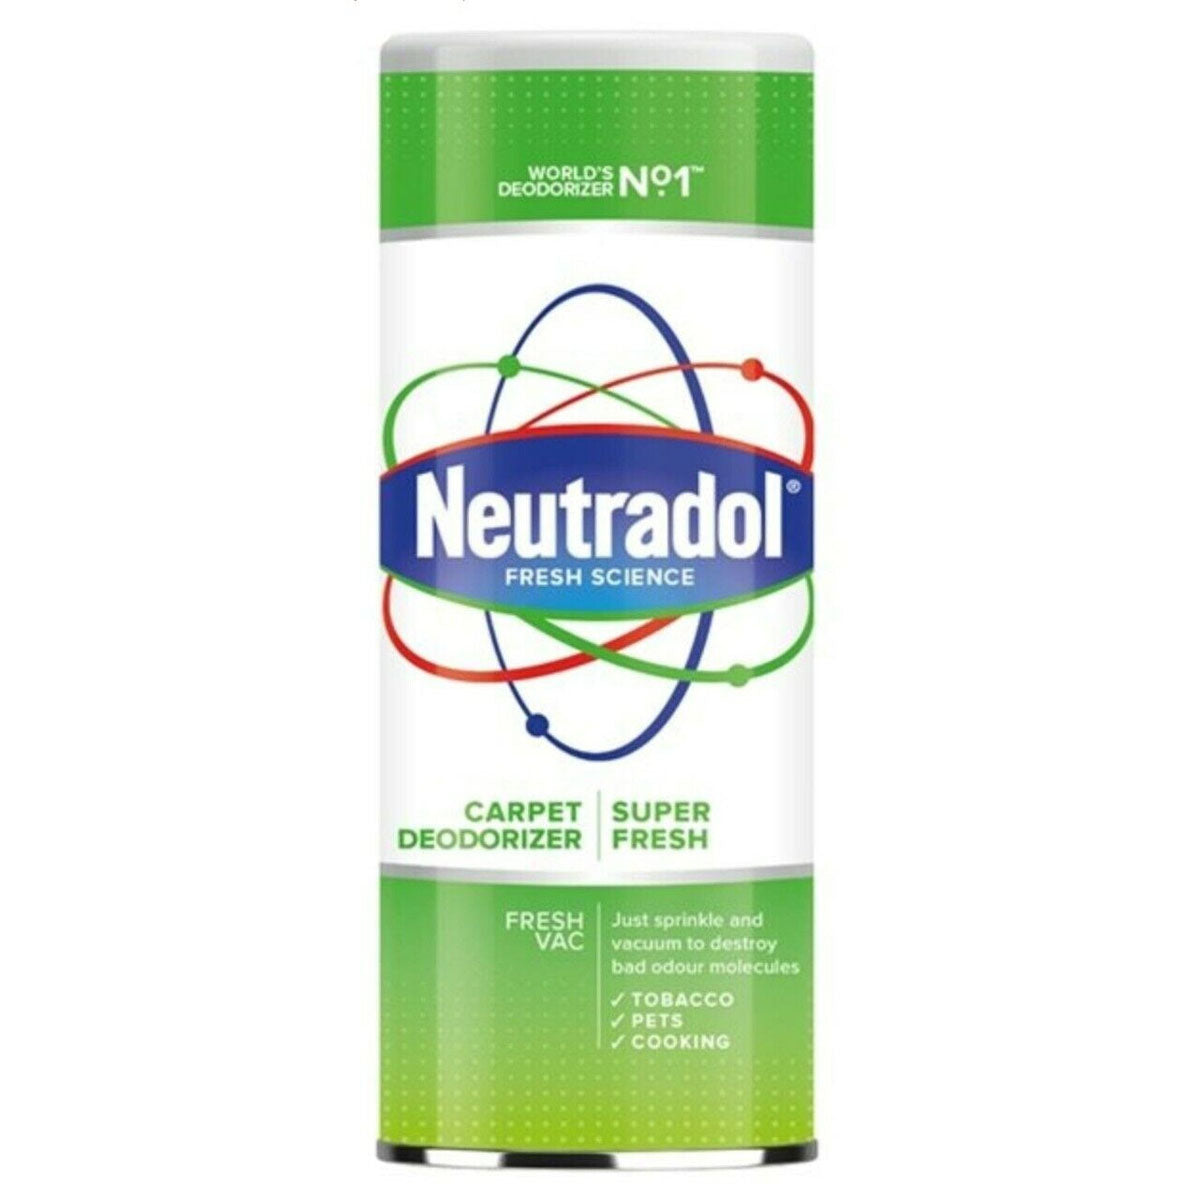 Neutradol - Super Fresh Carpet Deodorizer - 350ml carpet deodorizer